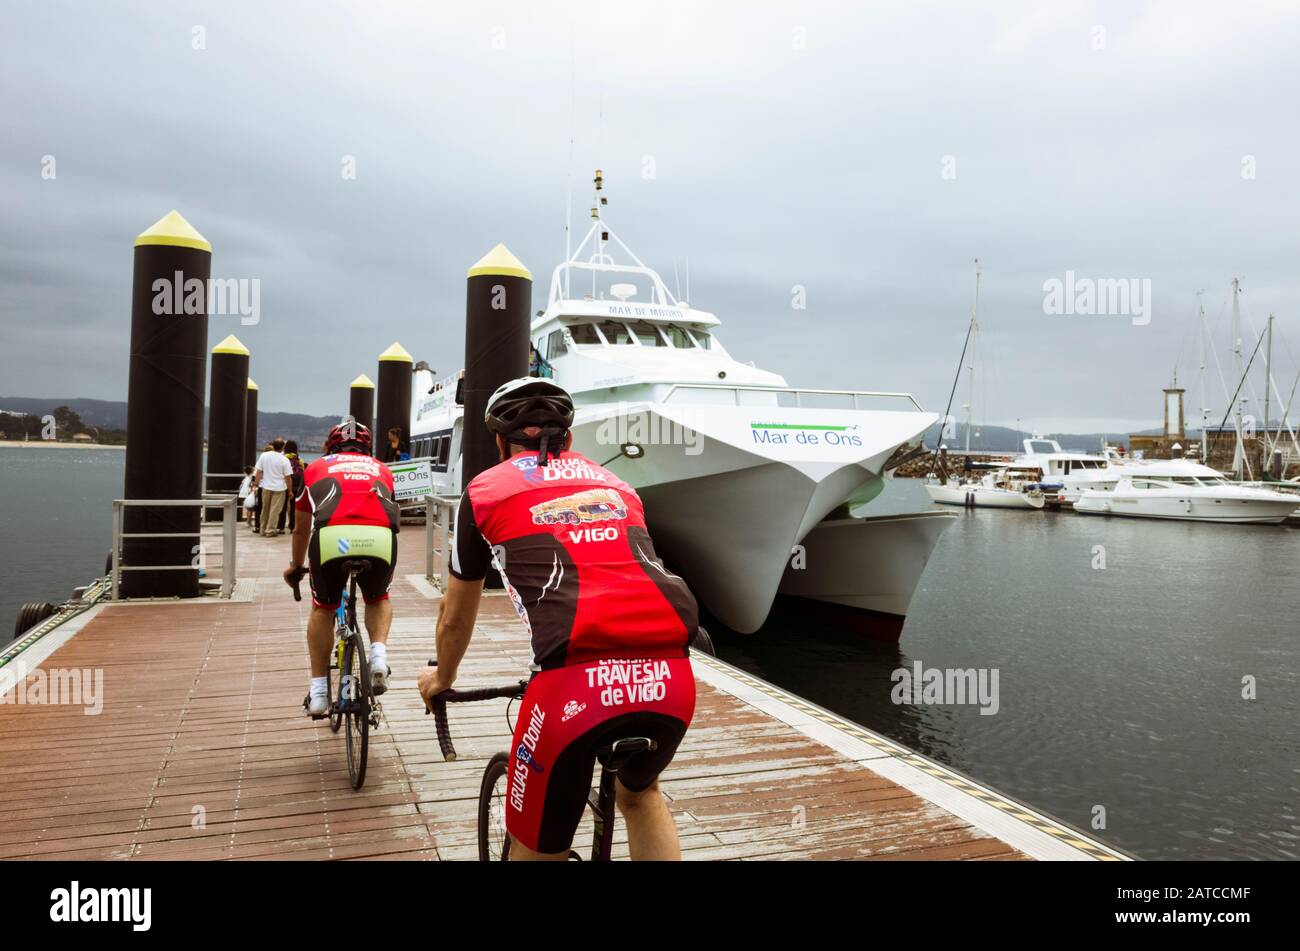 Cangas de Morrazo, Vigo, España : Los Ciclistas se acercan a un ferry en el  puerto de Cangas do Morrazo Fotografía de stock - Alamy